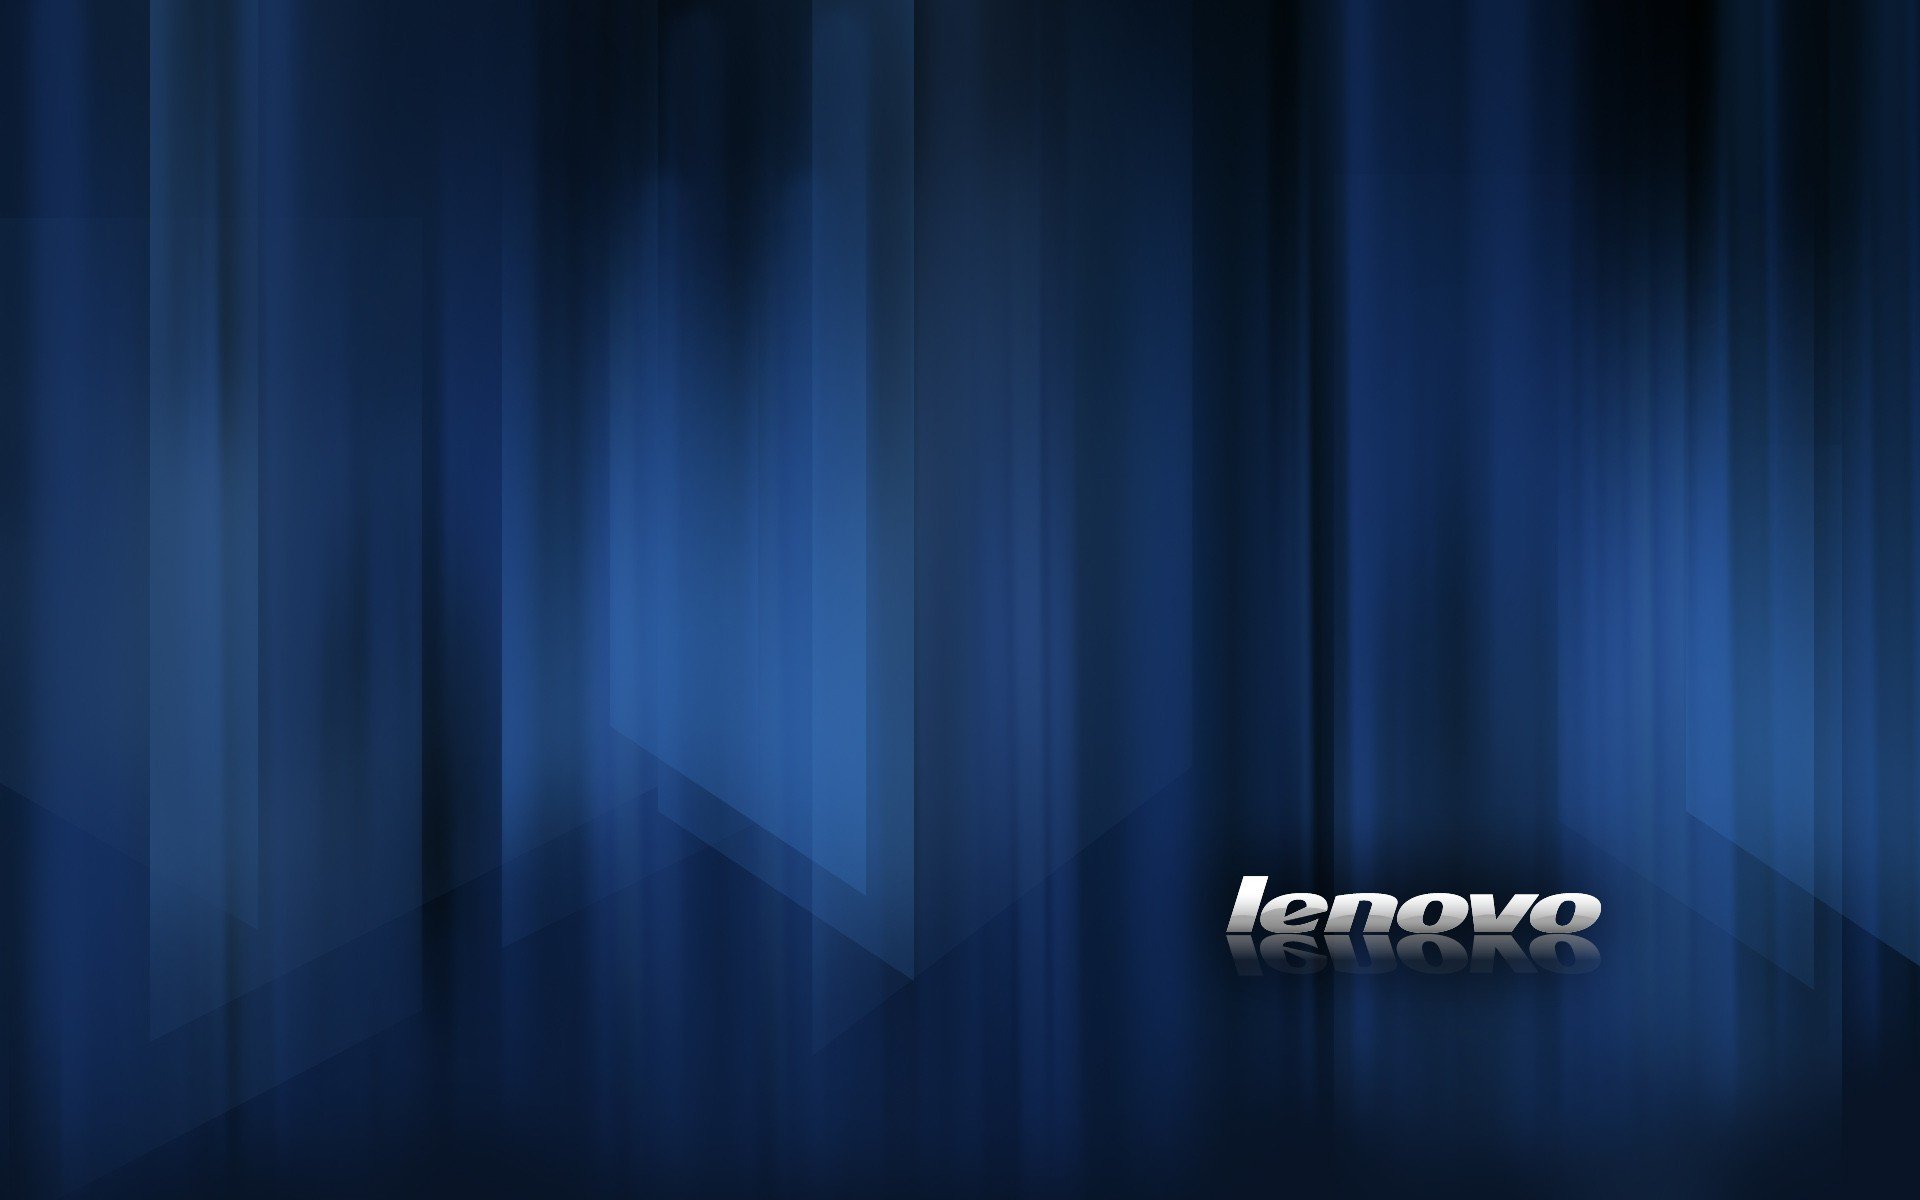 blue, Computers, Technology, Ibm, Computer, Technology, Brands, Logos, Lenovo Wallpaper